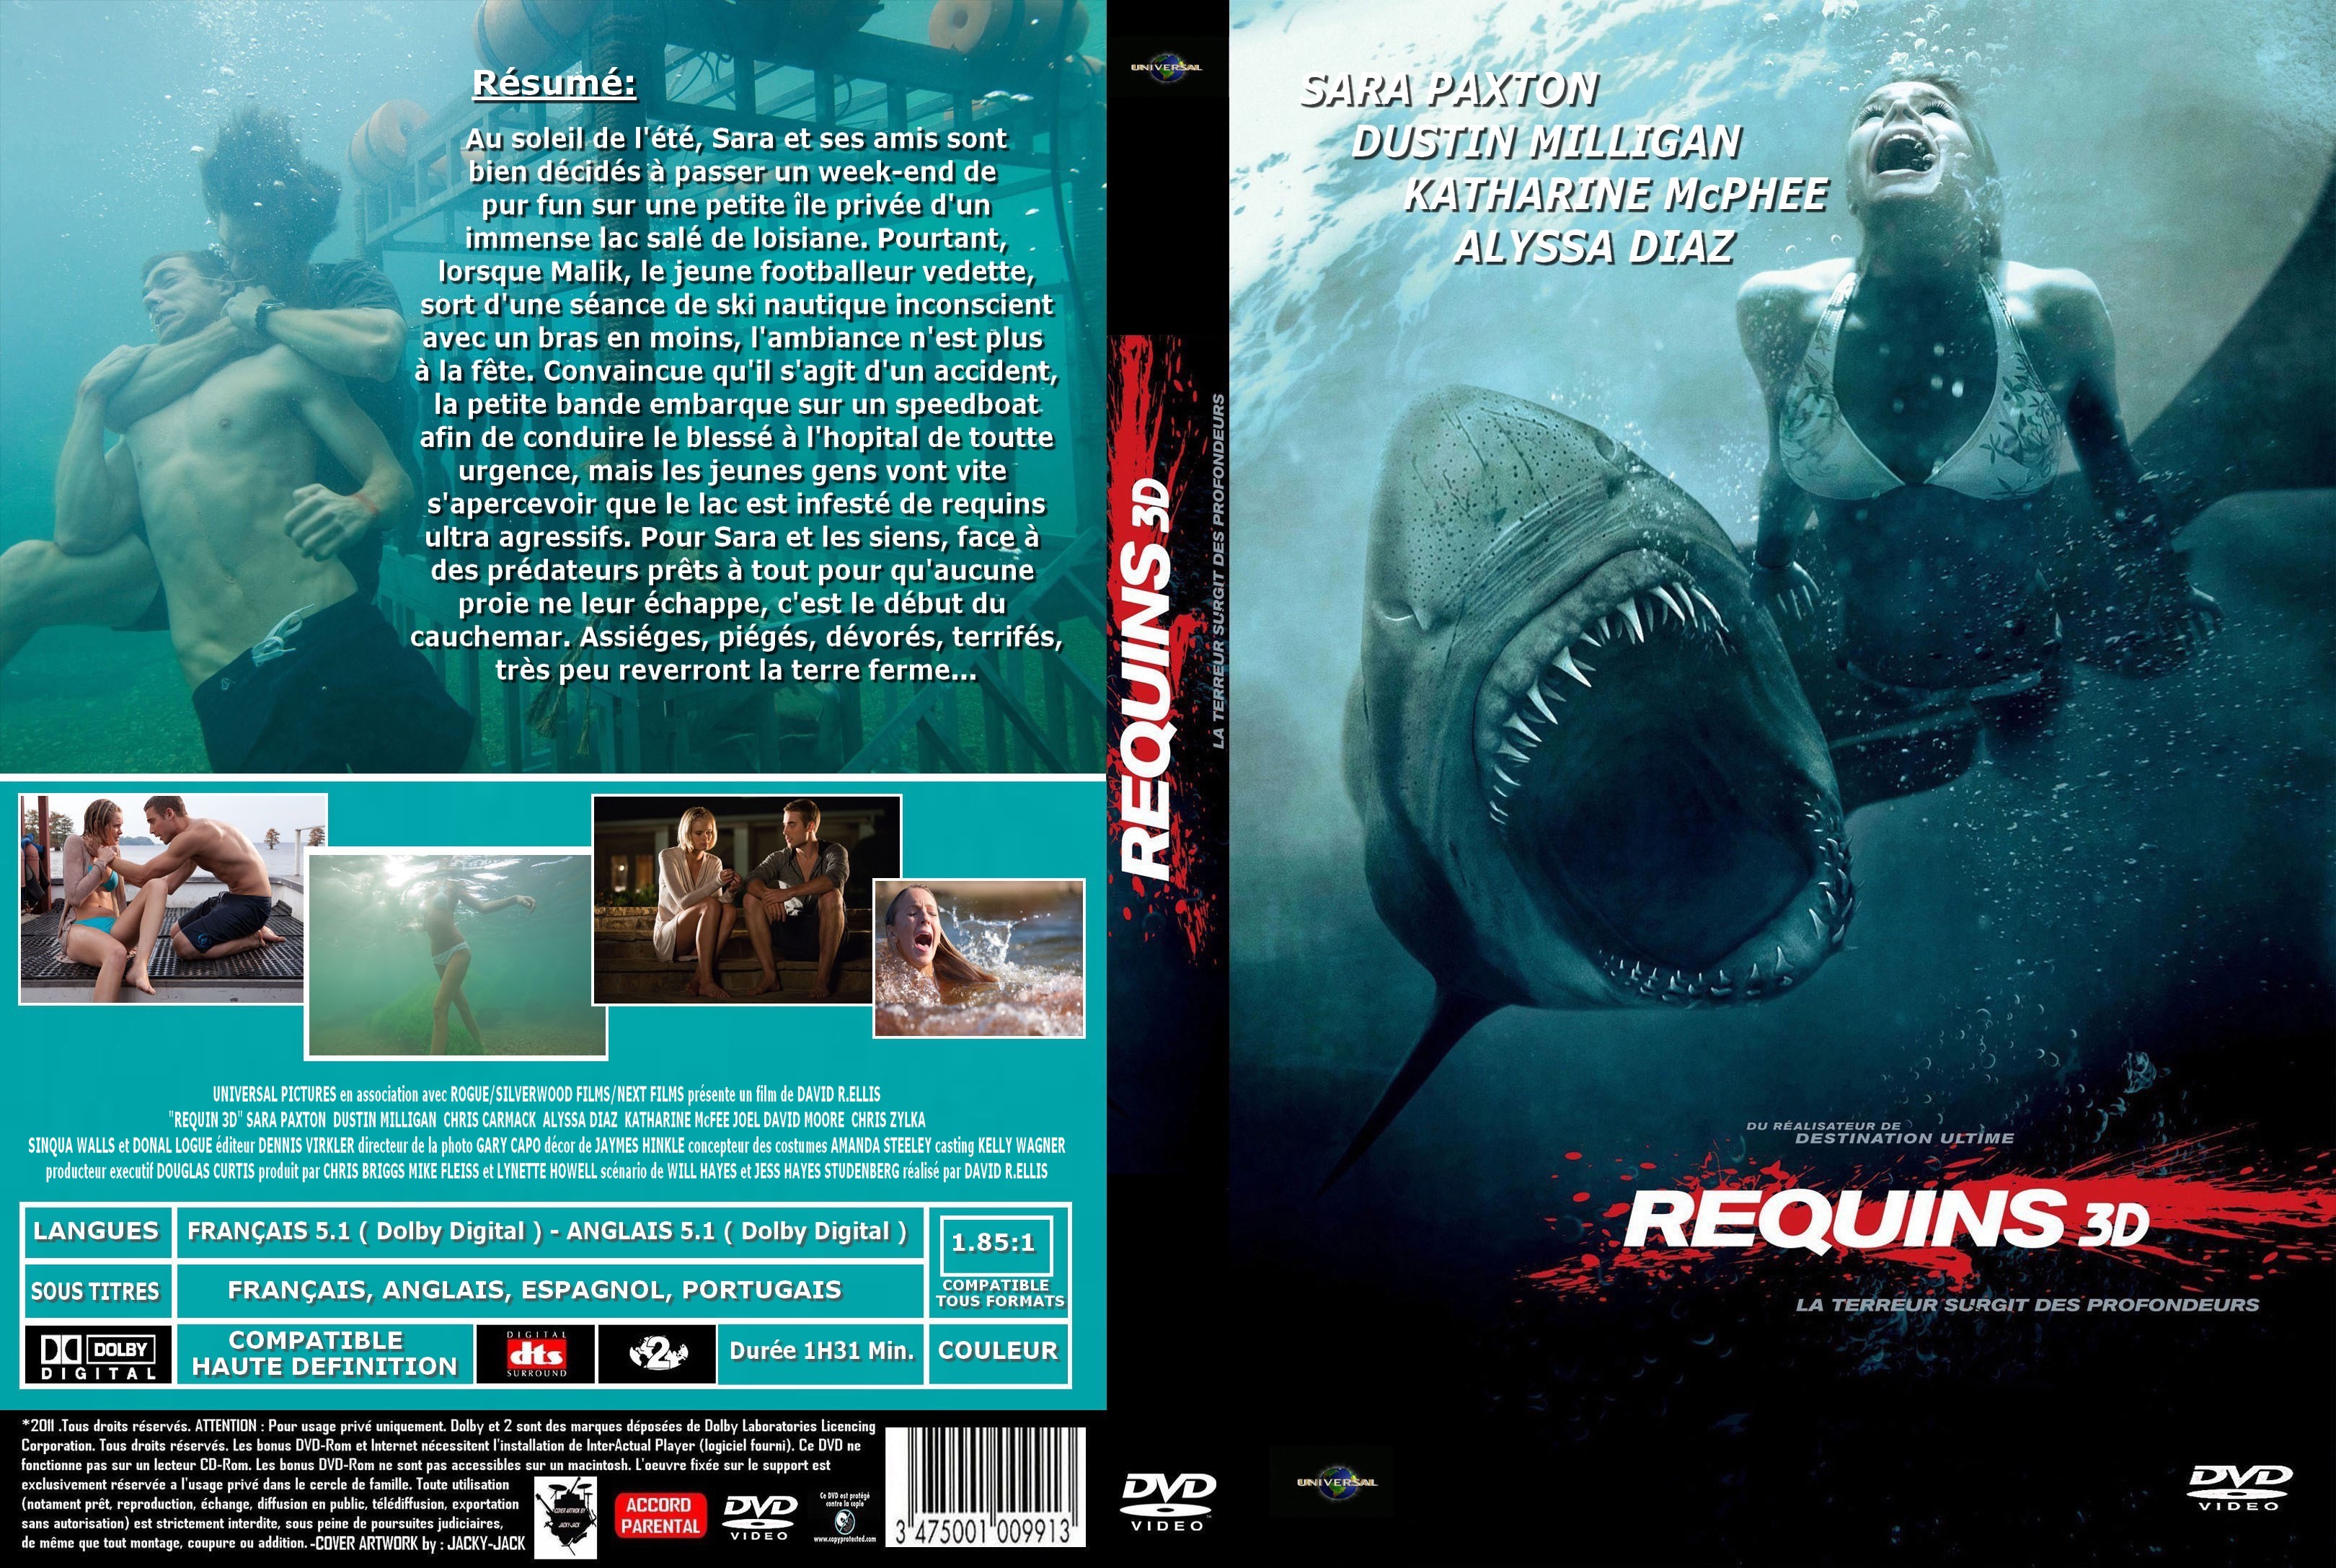 Jaquette DVD Requins 3D custom